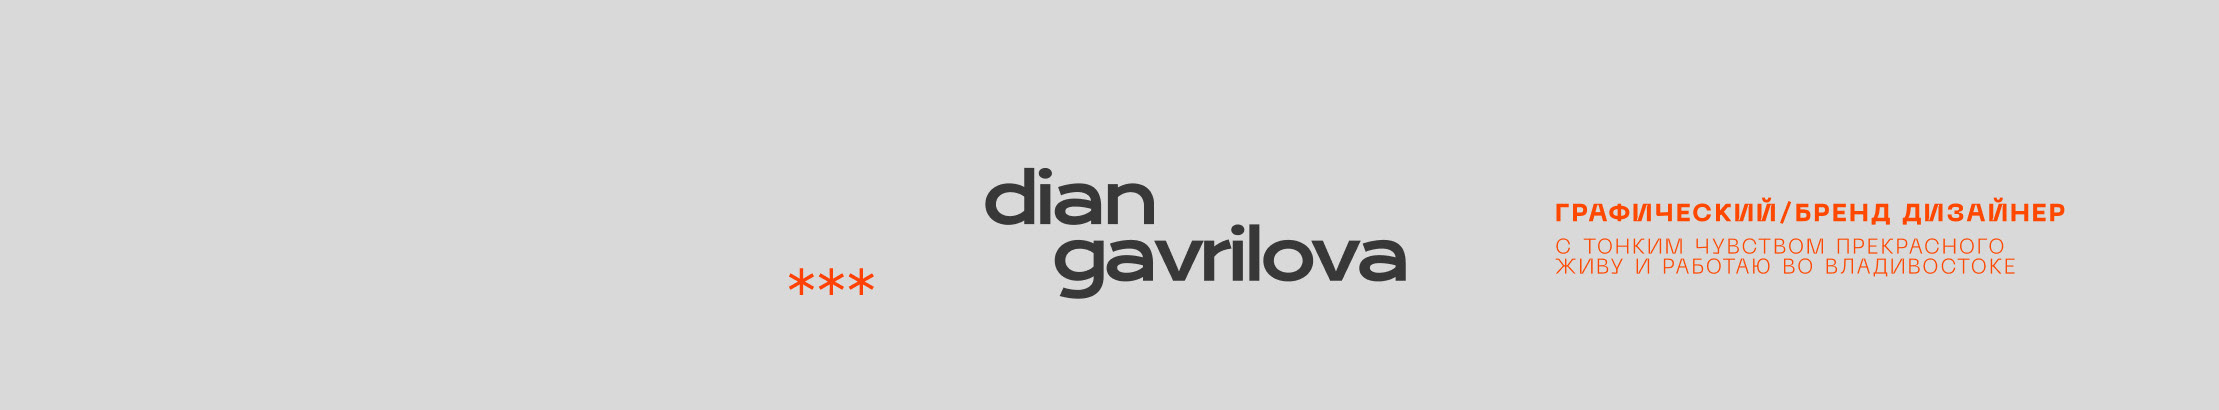 Diana Gavrilovas profilbanner